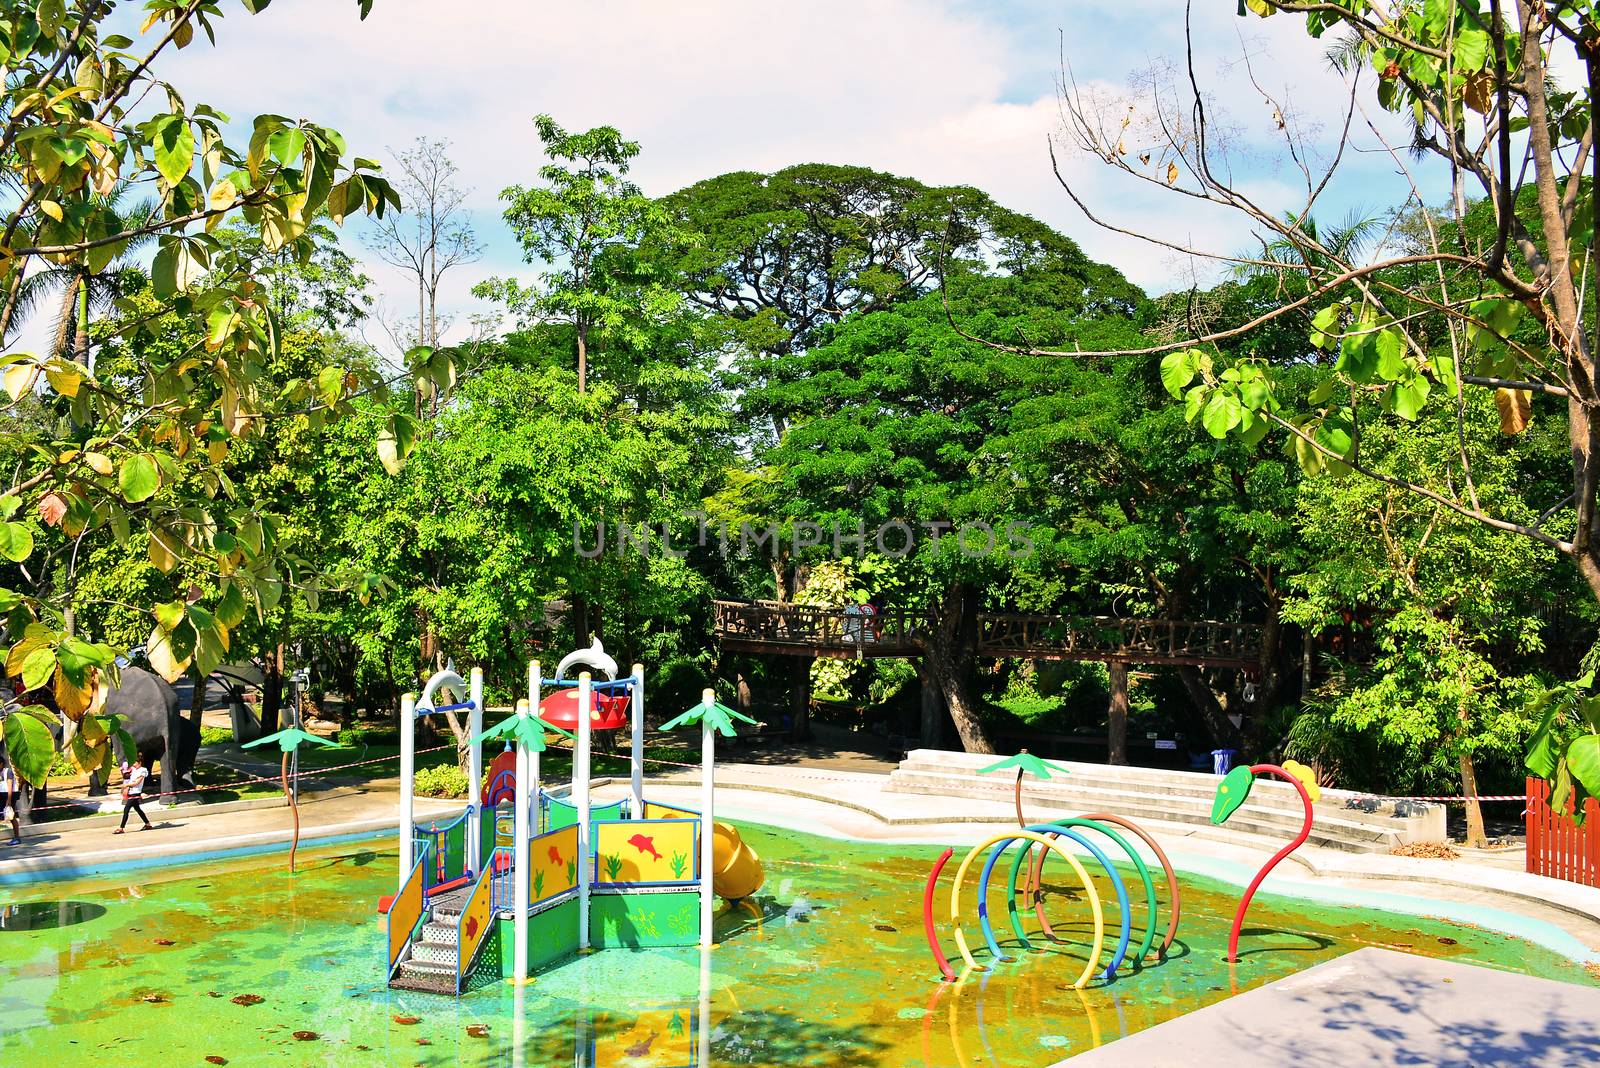 Playground at Dusit Zoo in Khao Din Park, Bangkok, Thailand by imwaltersy